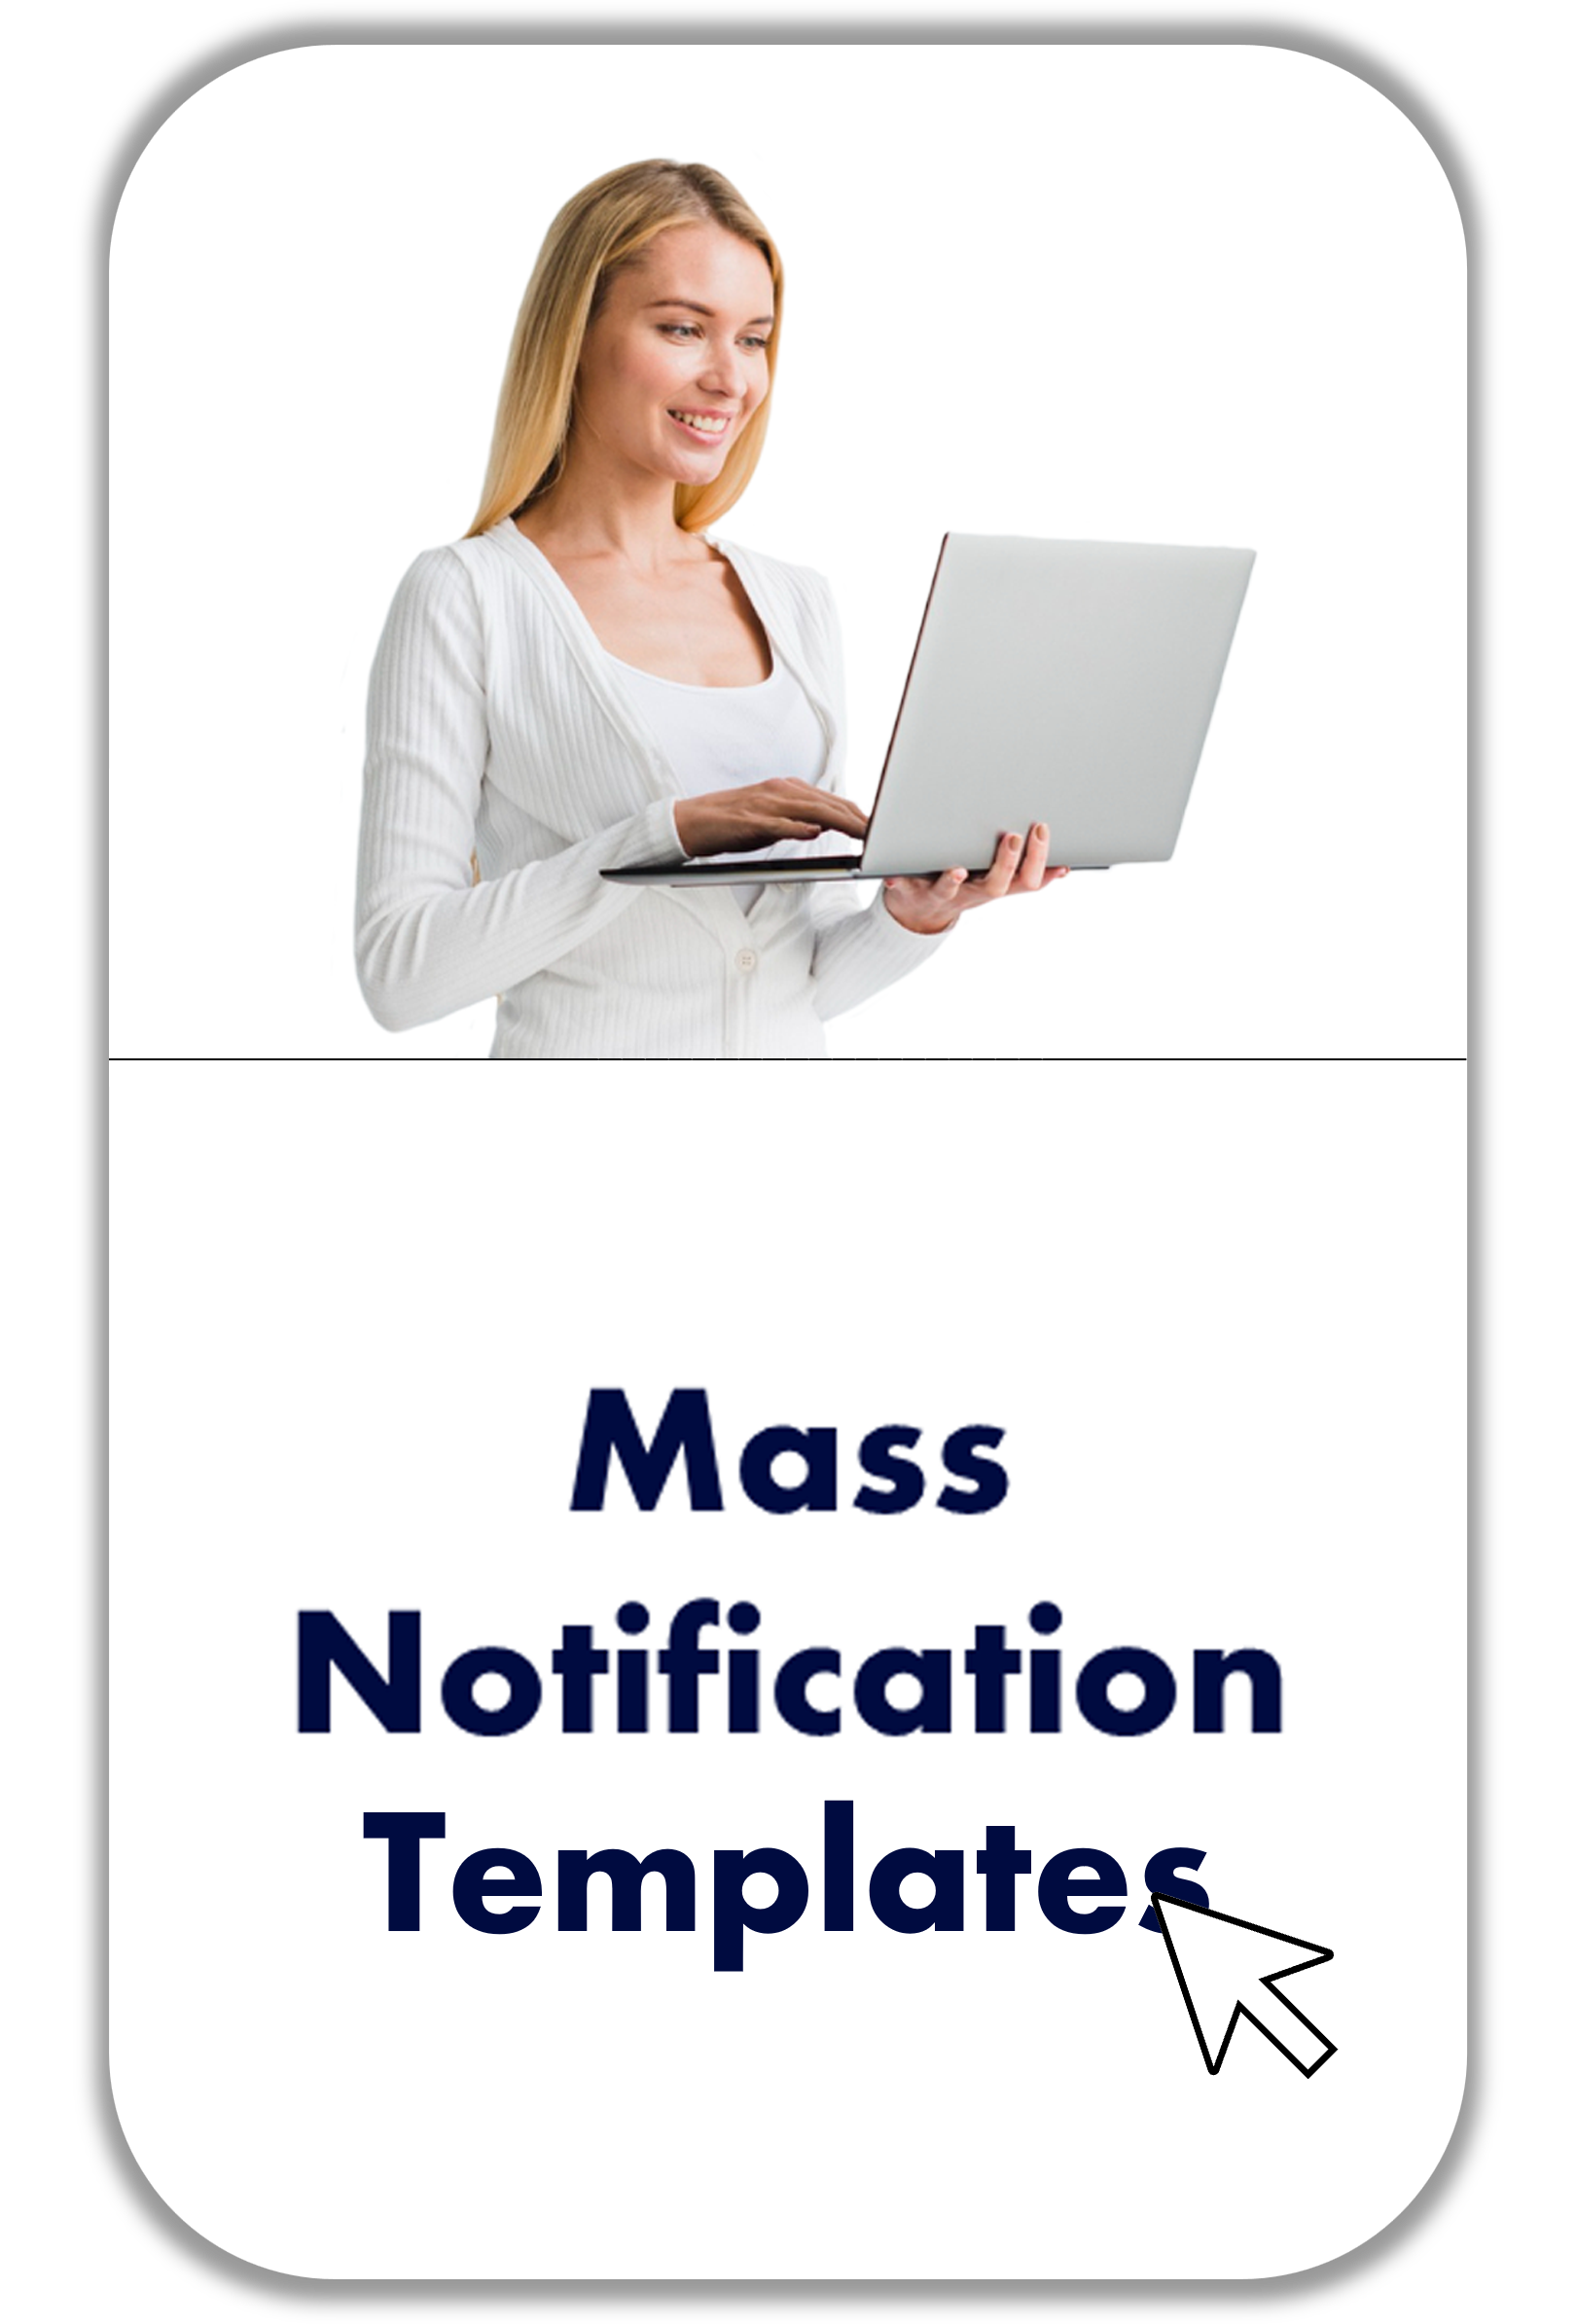 Mass Notification Templates